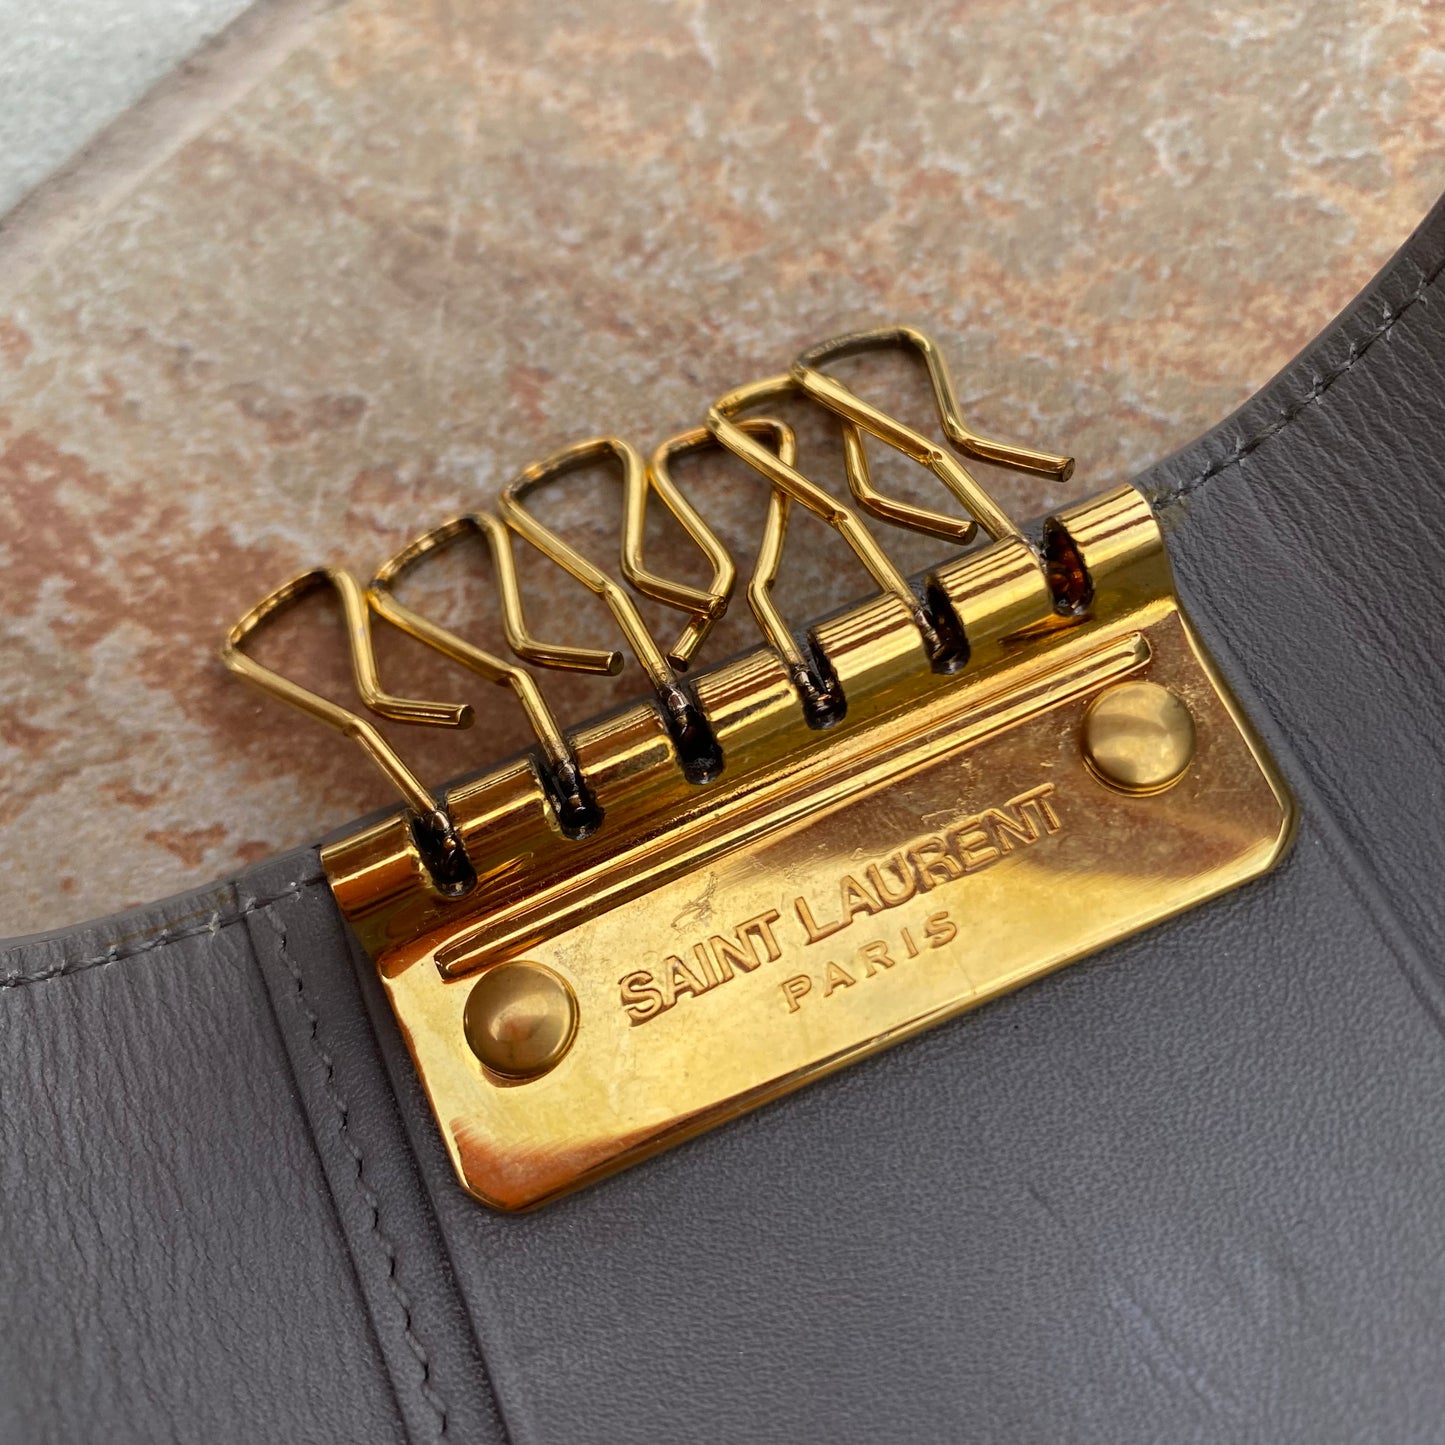 Saint Laurent 6 Ring Leather Key Card Holder